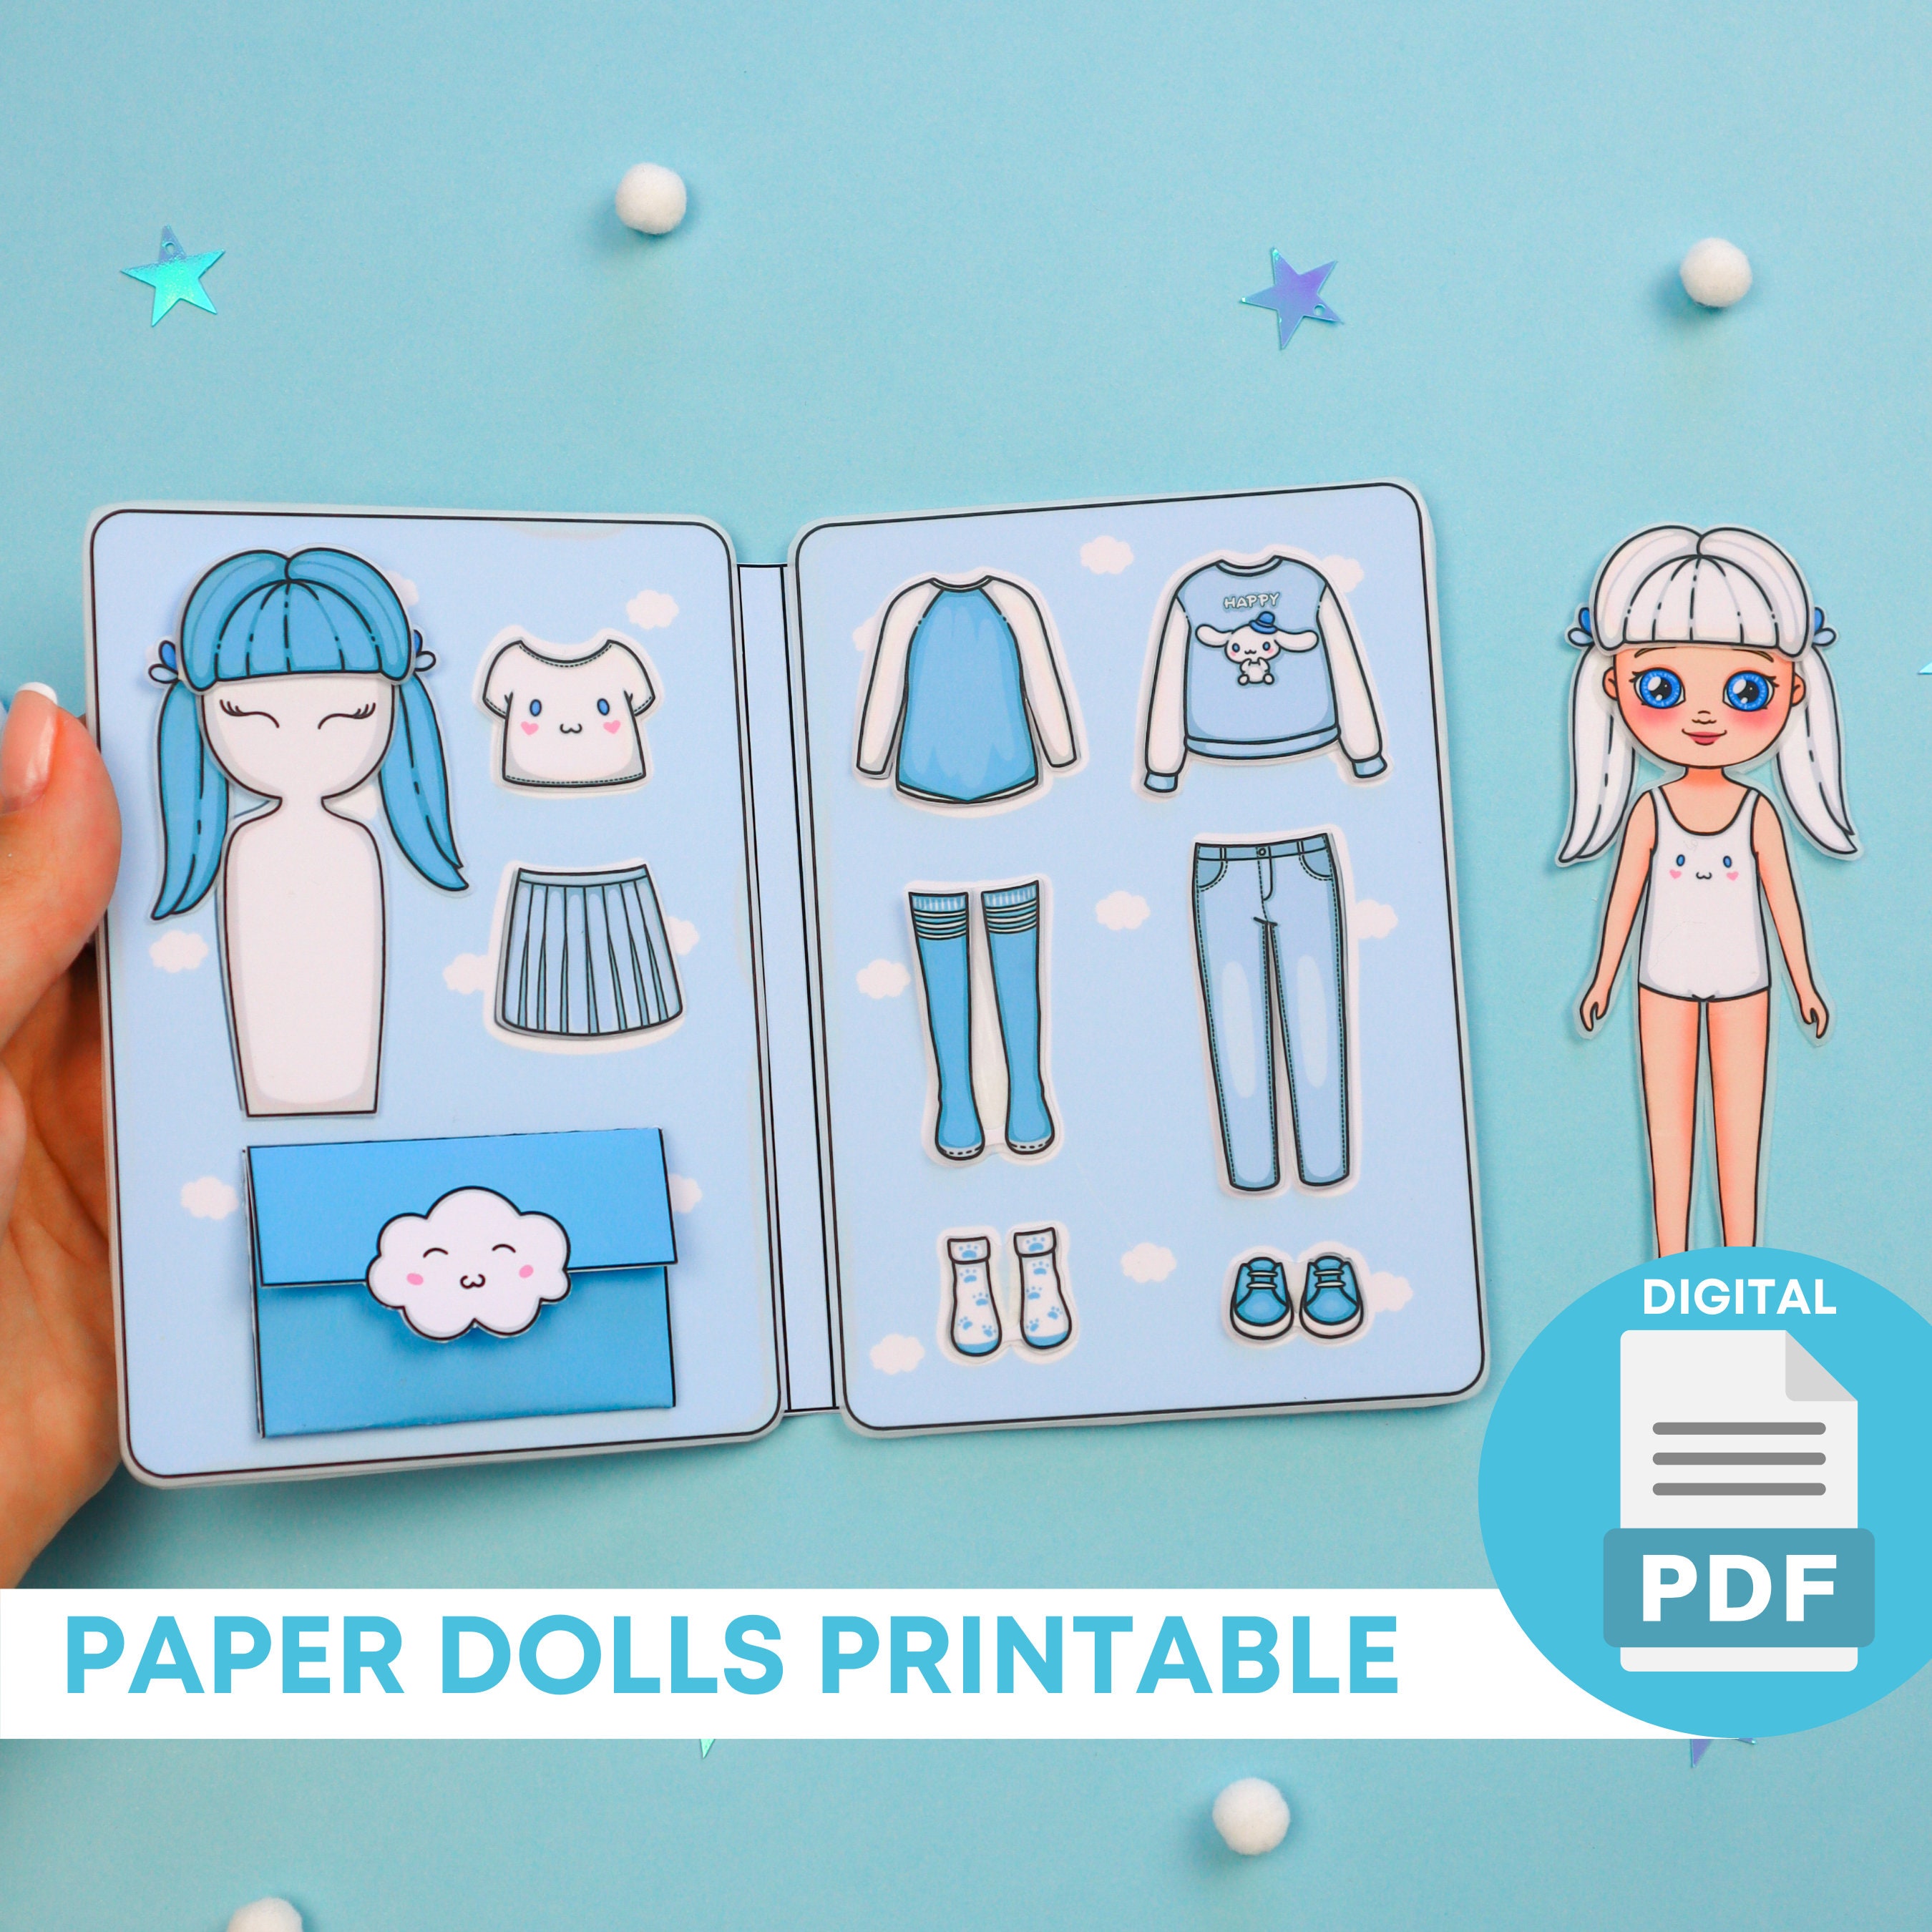 paper-dolls-diy-paper-dolls-clothing-paper-dolls-printable-cardboard